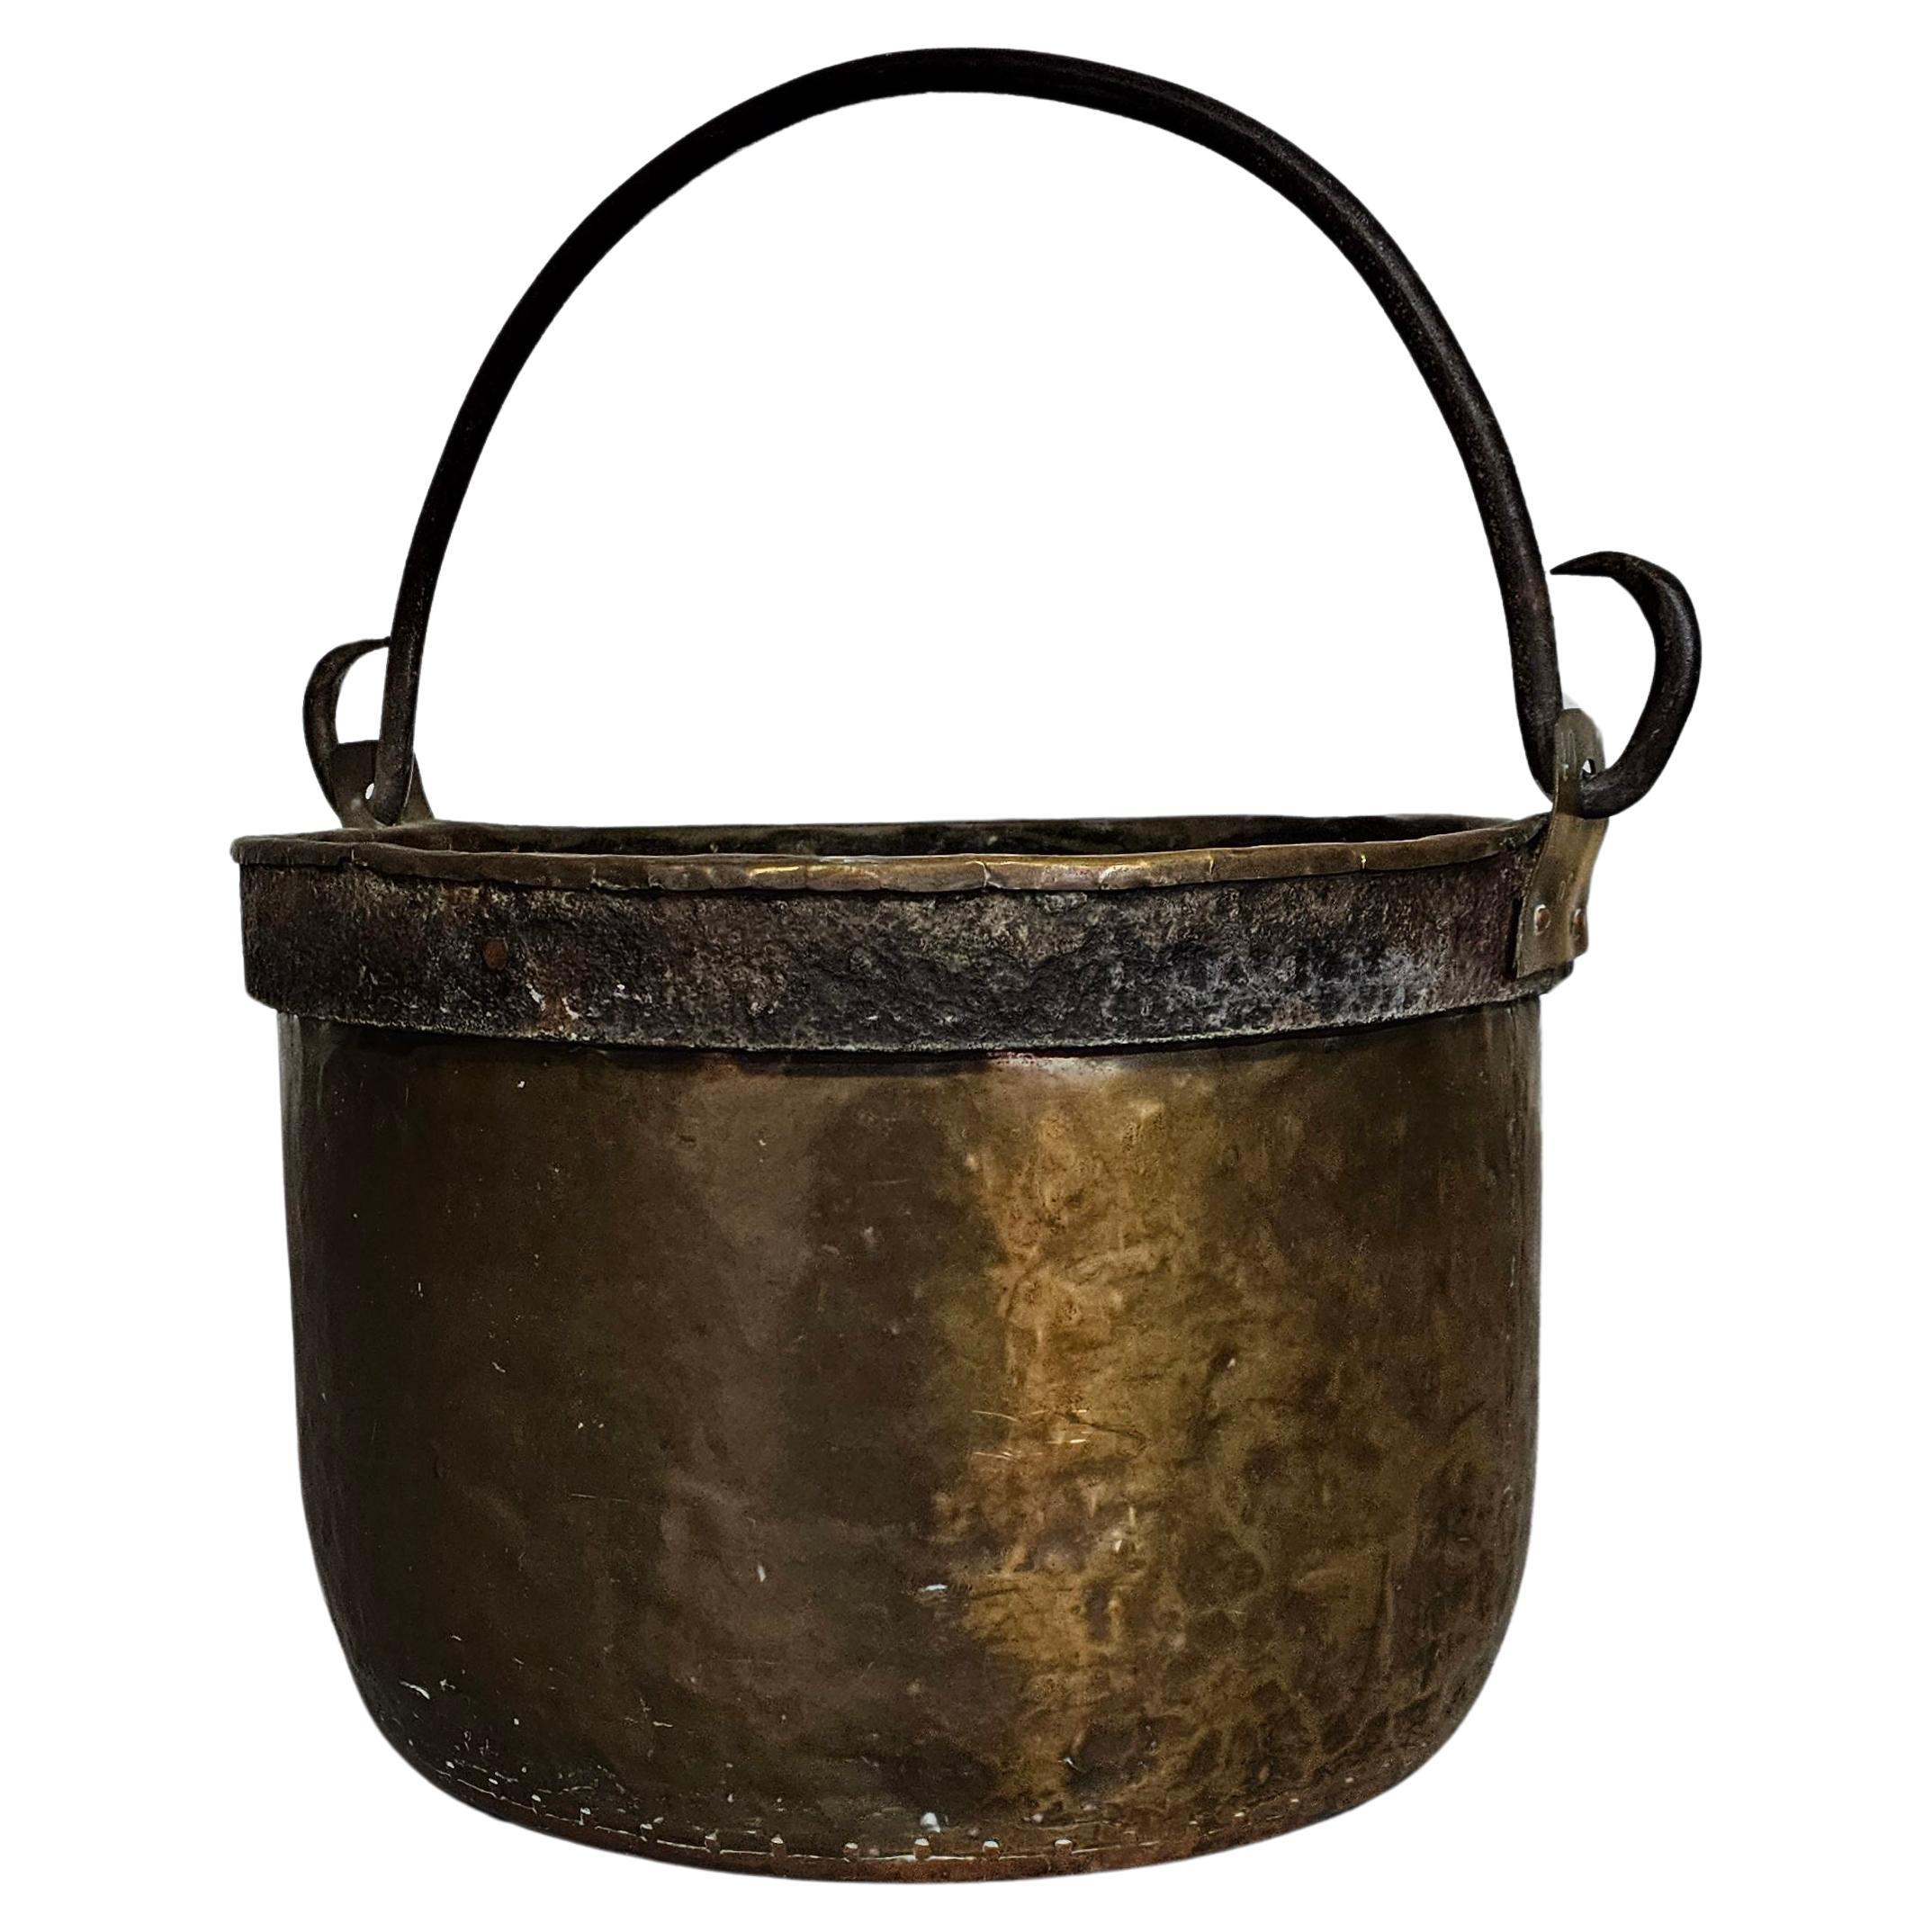  Dutch / Handled Fireplace - Copper / Brass - Bucket  For Sale